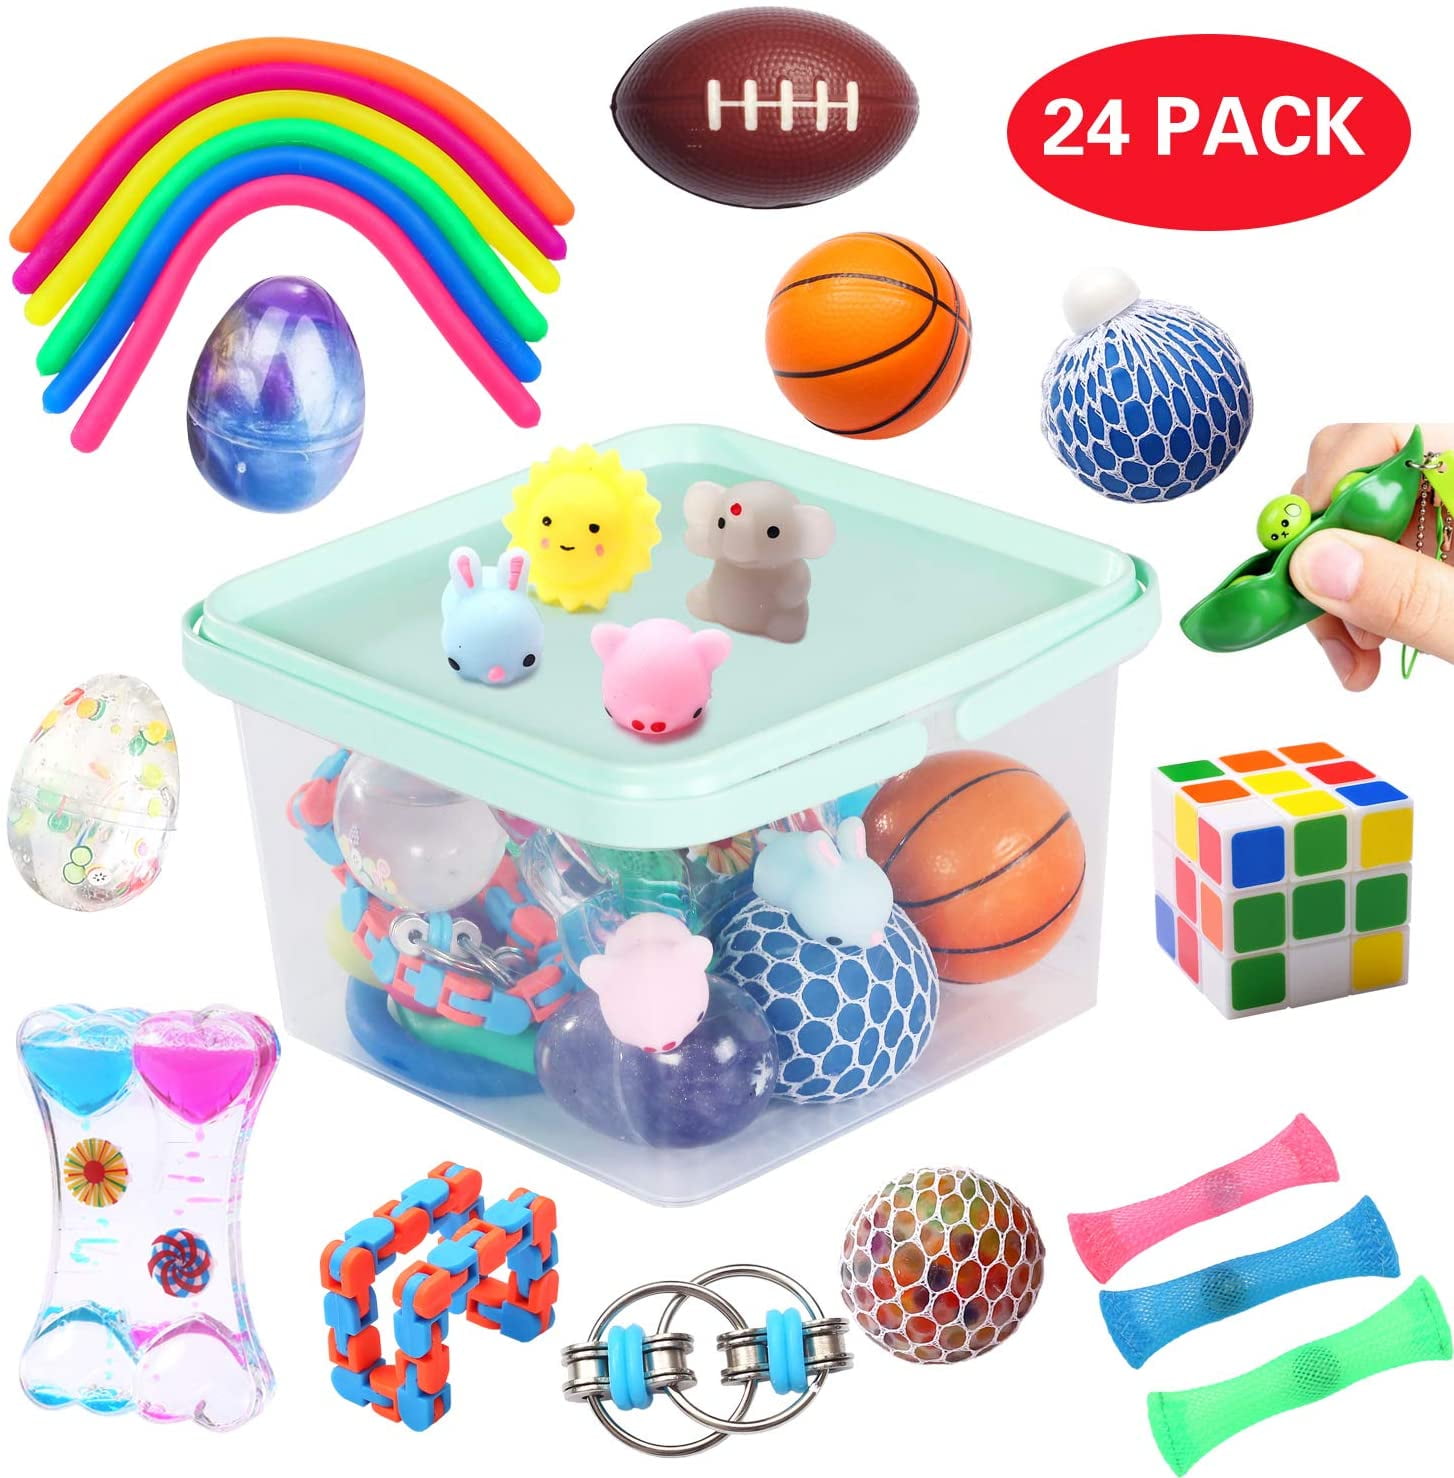 24 Stk Fidget Toys Set Sensory Tools Bundle Stress Relief Hand Kid Adults Toys 